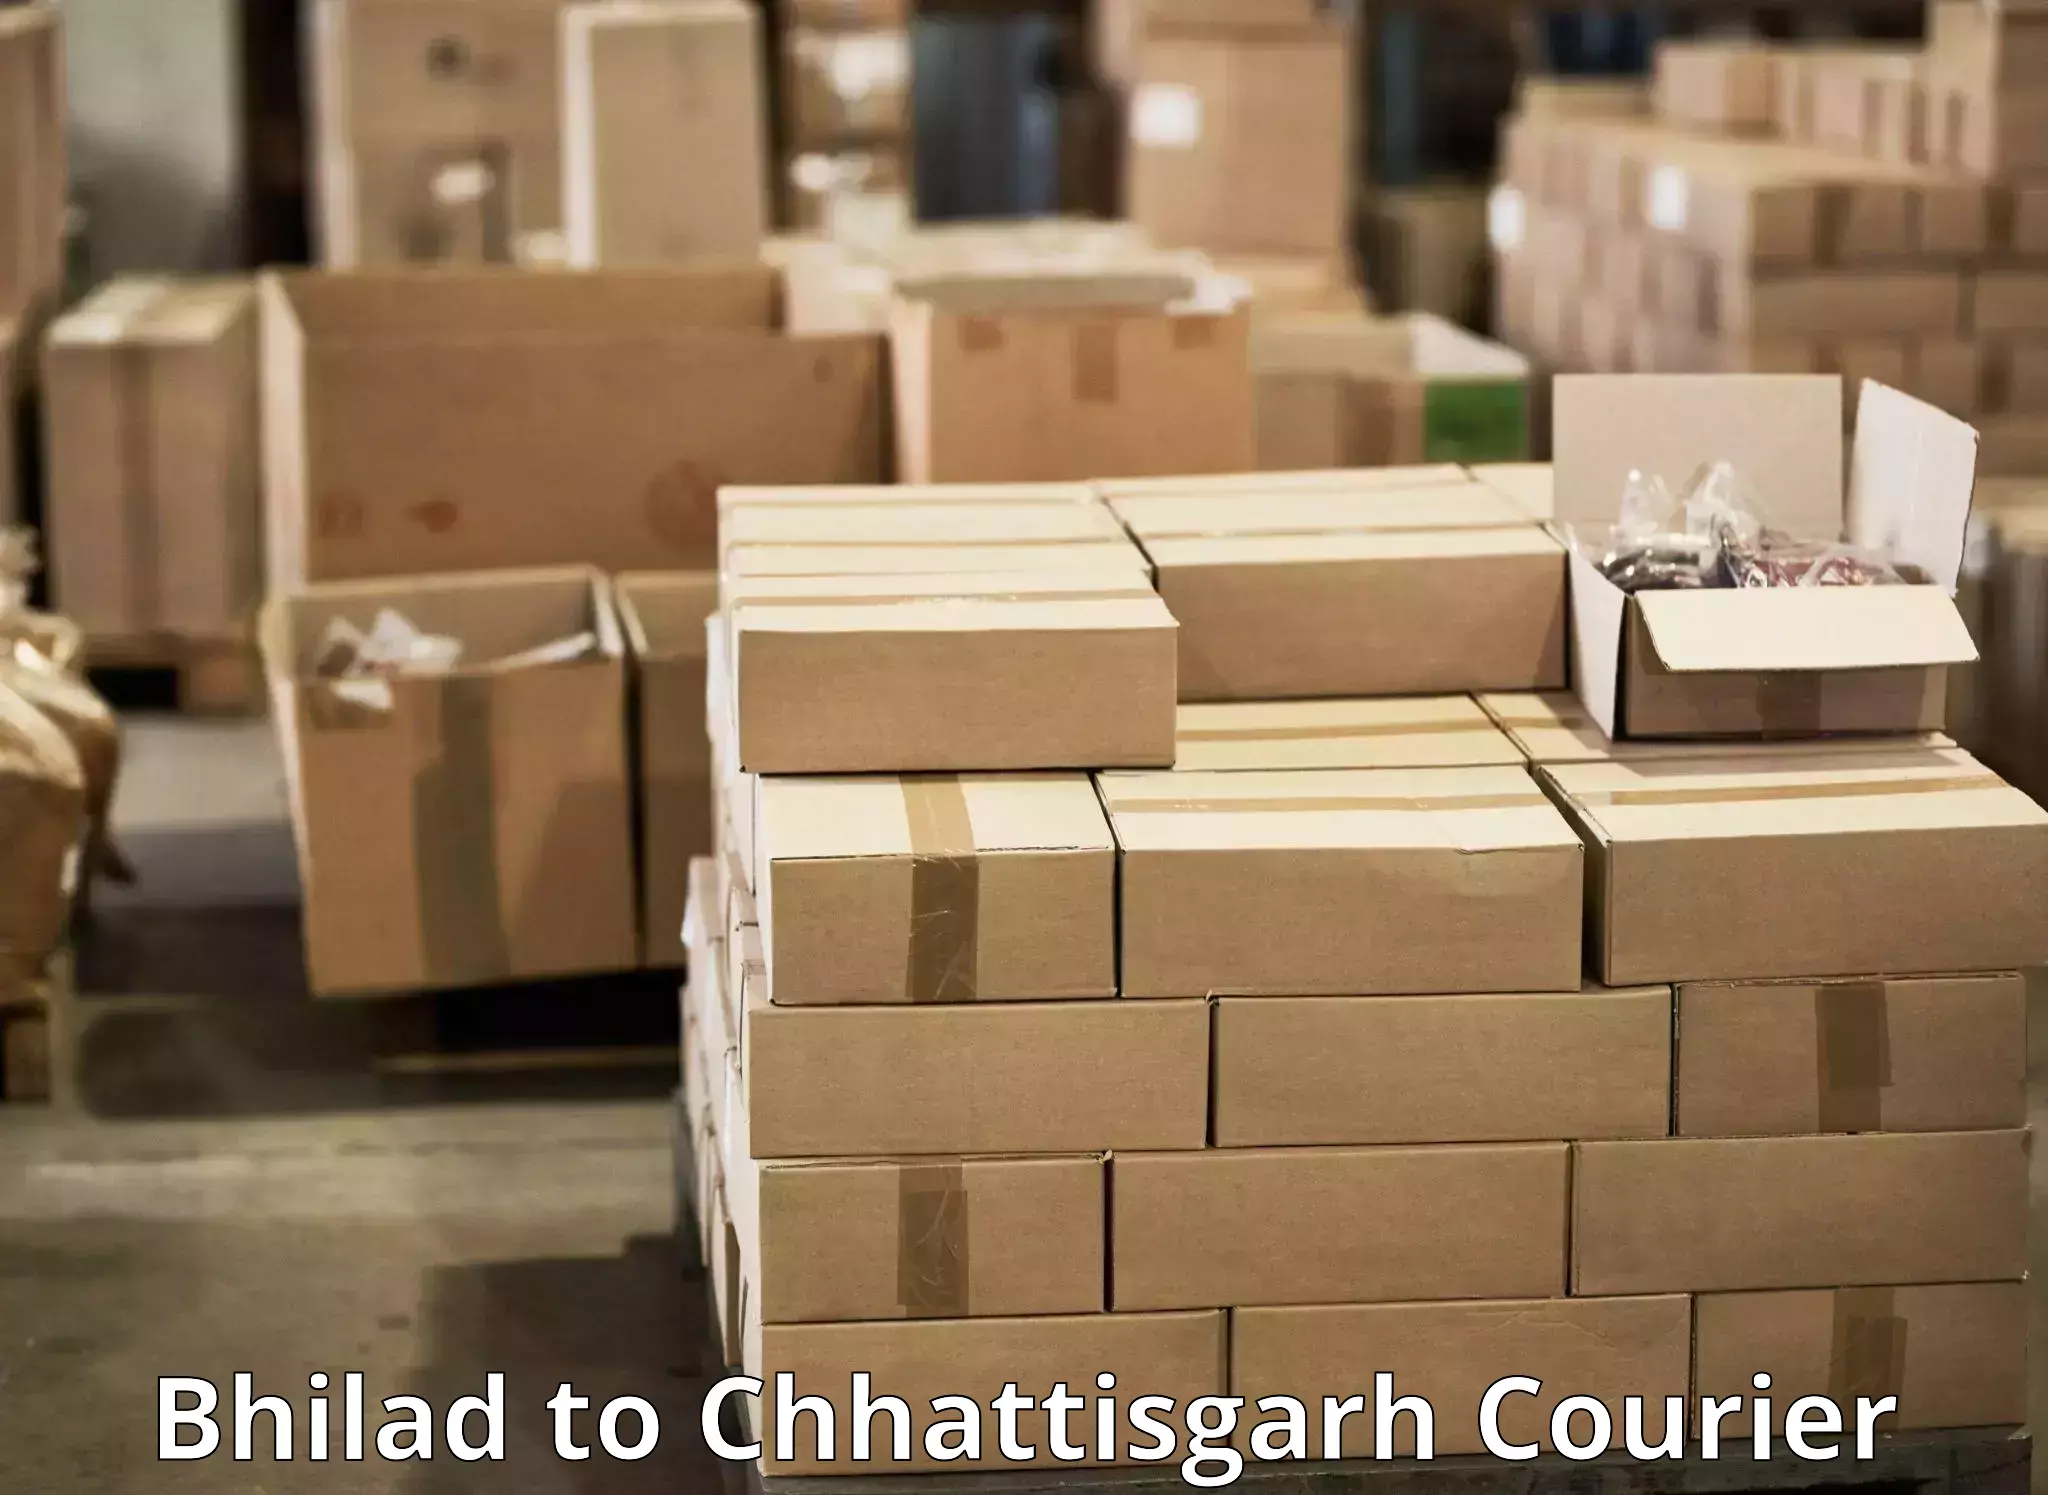 Quick dispatch service Bhilad to Patna Chhattisgarh